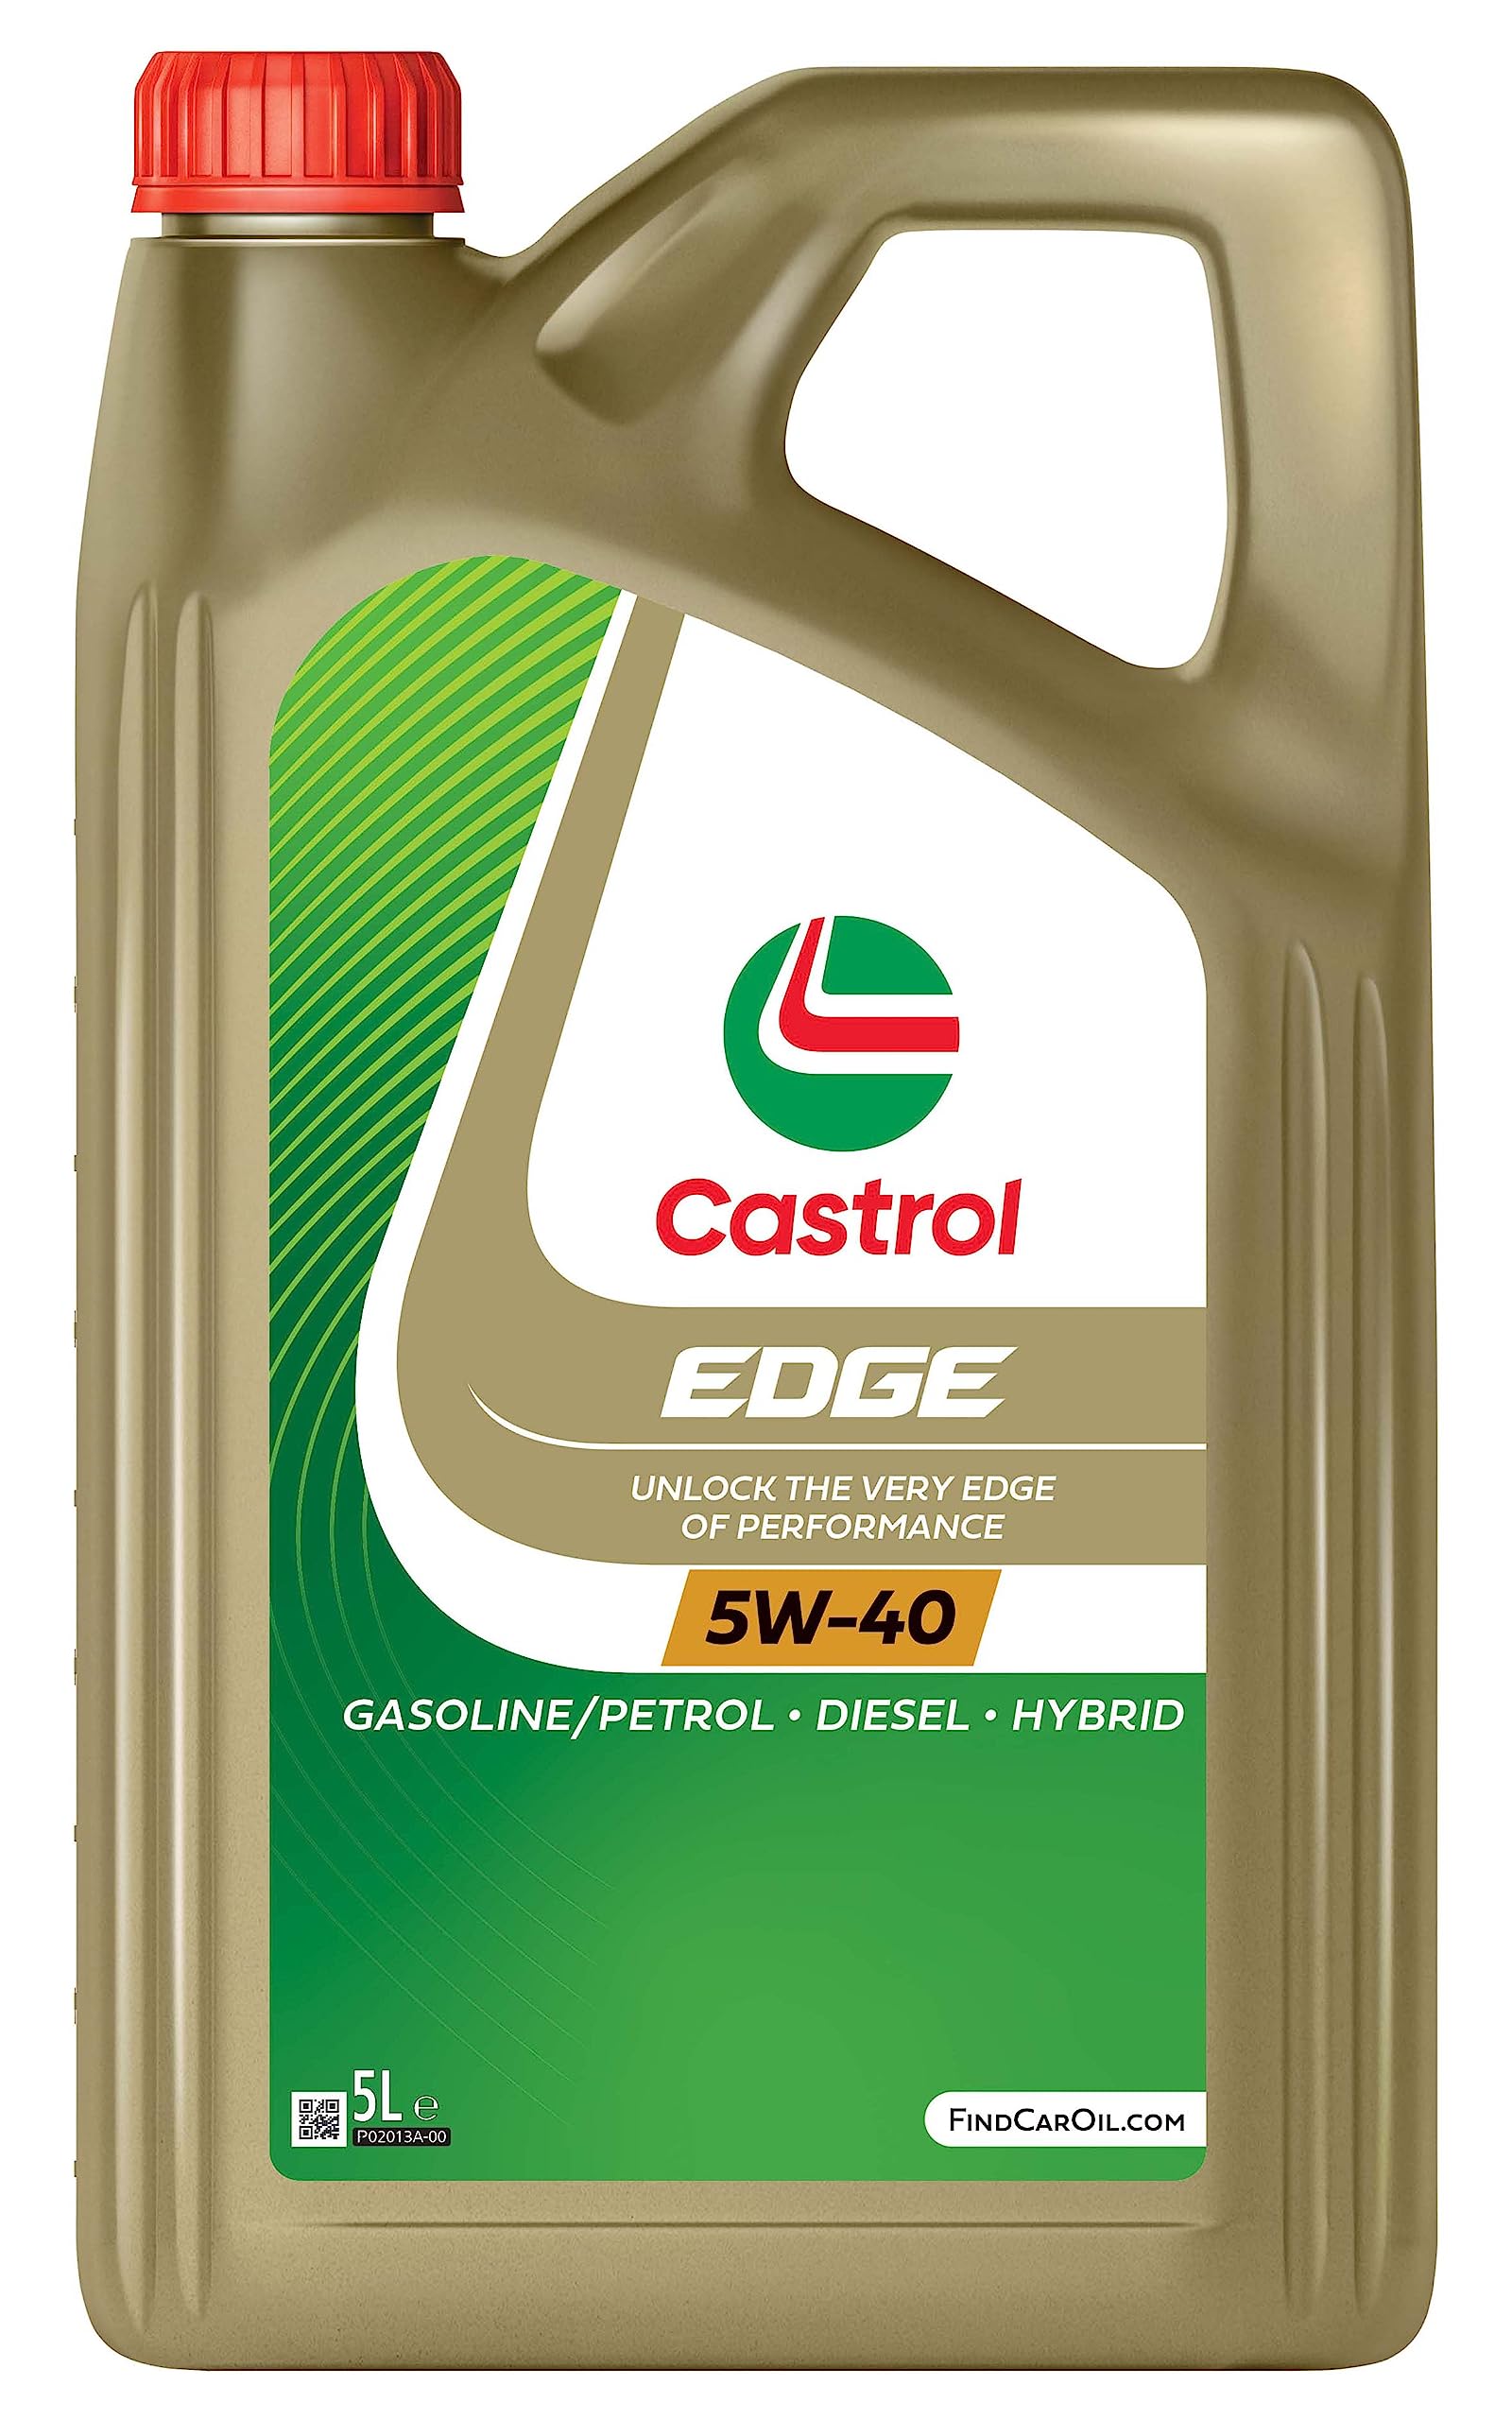 Castrol EDGE 5W-40 Motoröl, 5L von Castrol